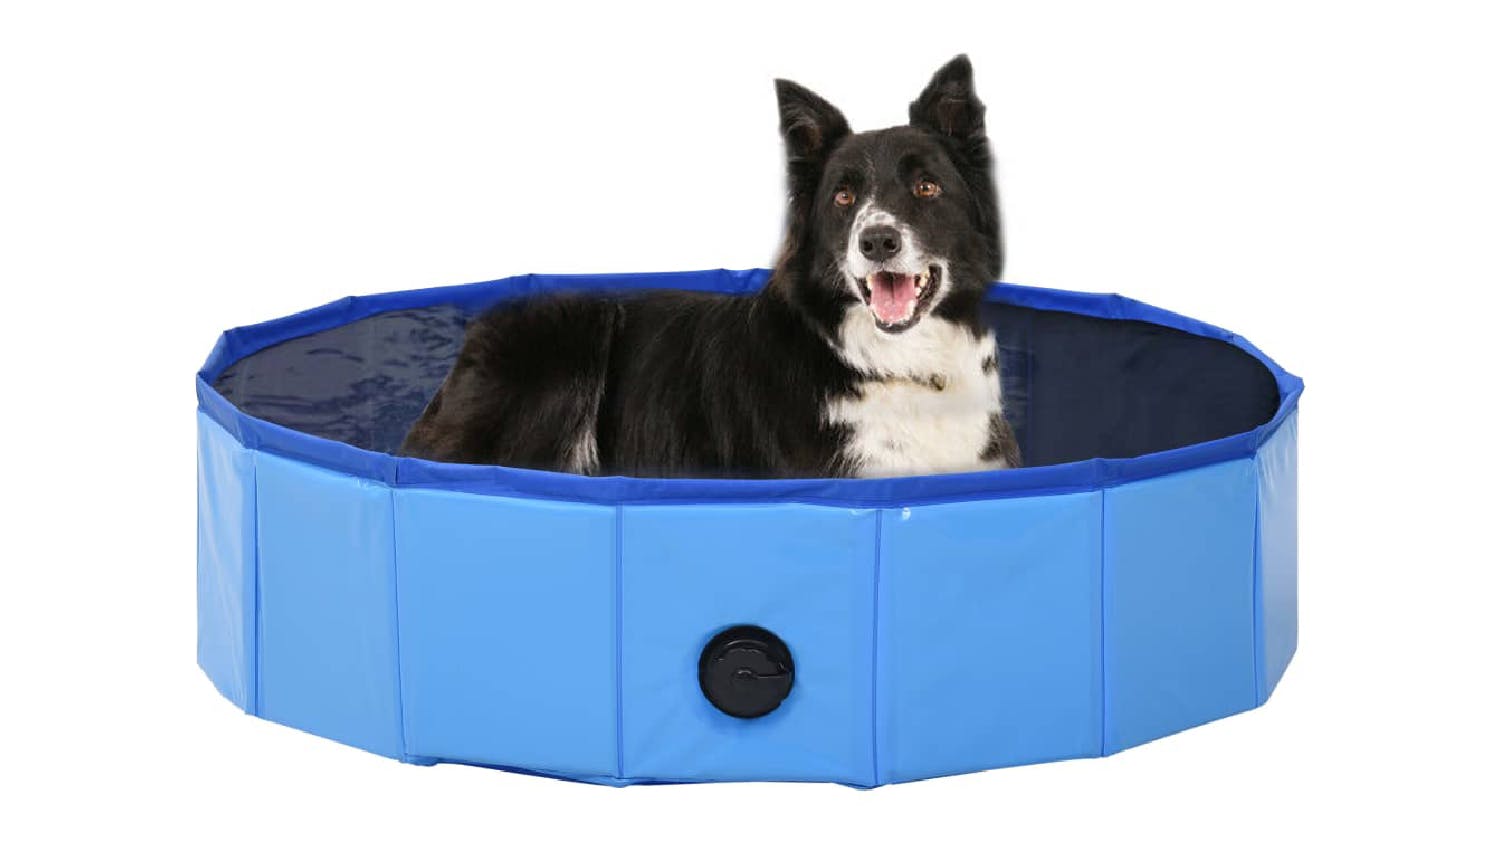 NNEVL Foldable Dog Swimming Pool 120 x 30cm - Blue